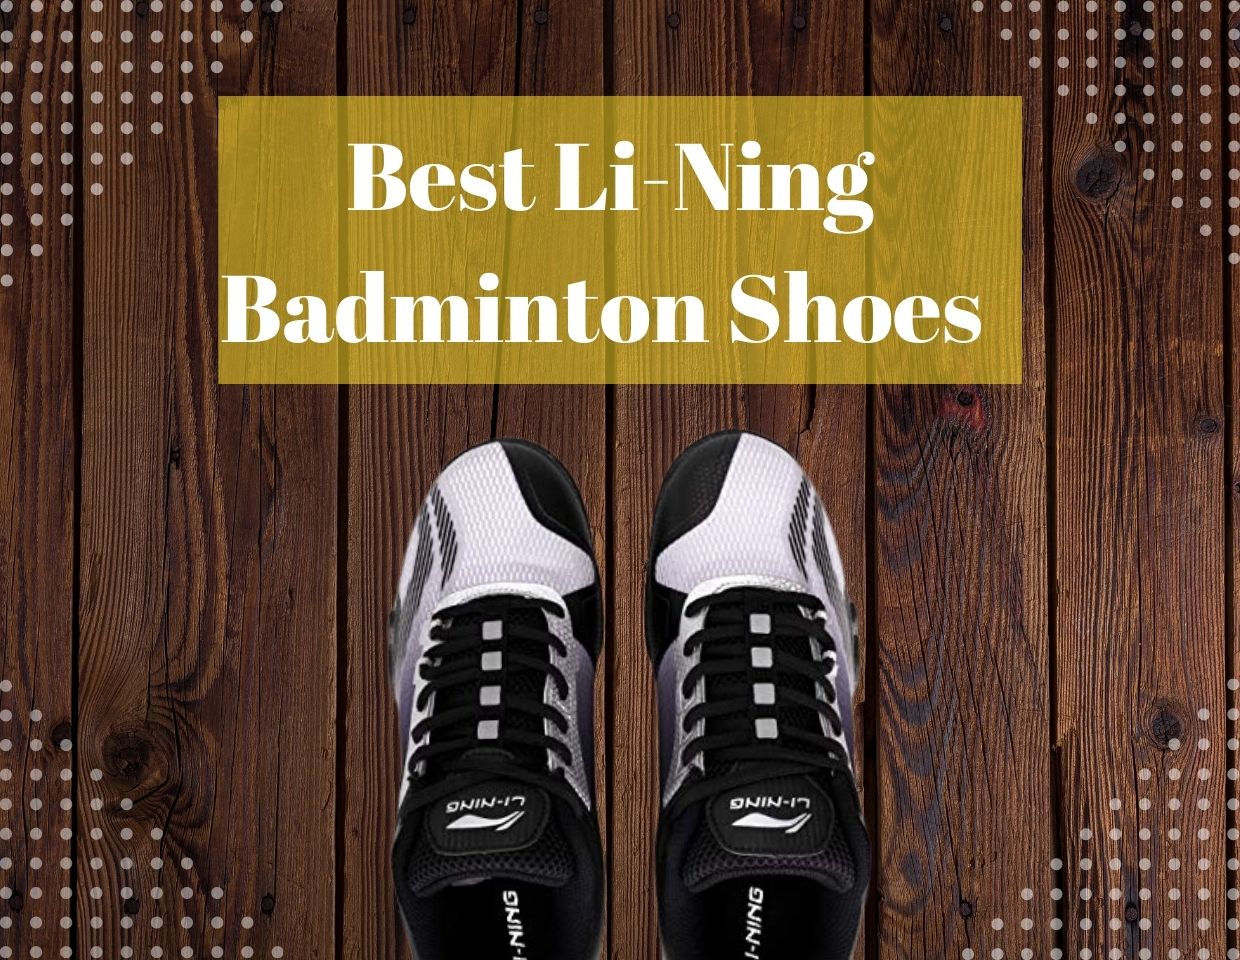 Best Li-Ning Badminton Shoes Reviews